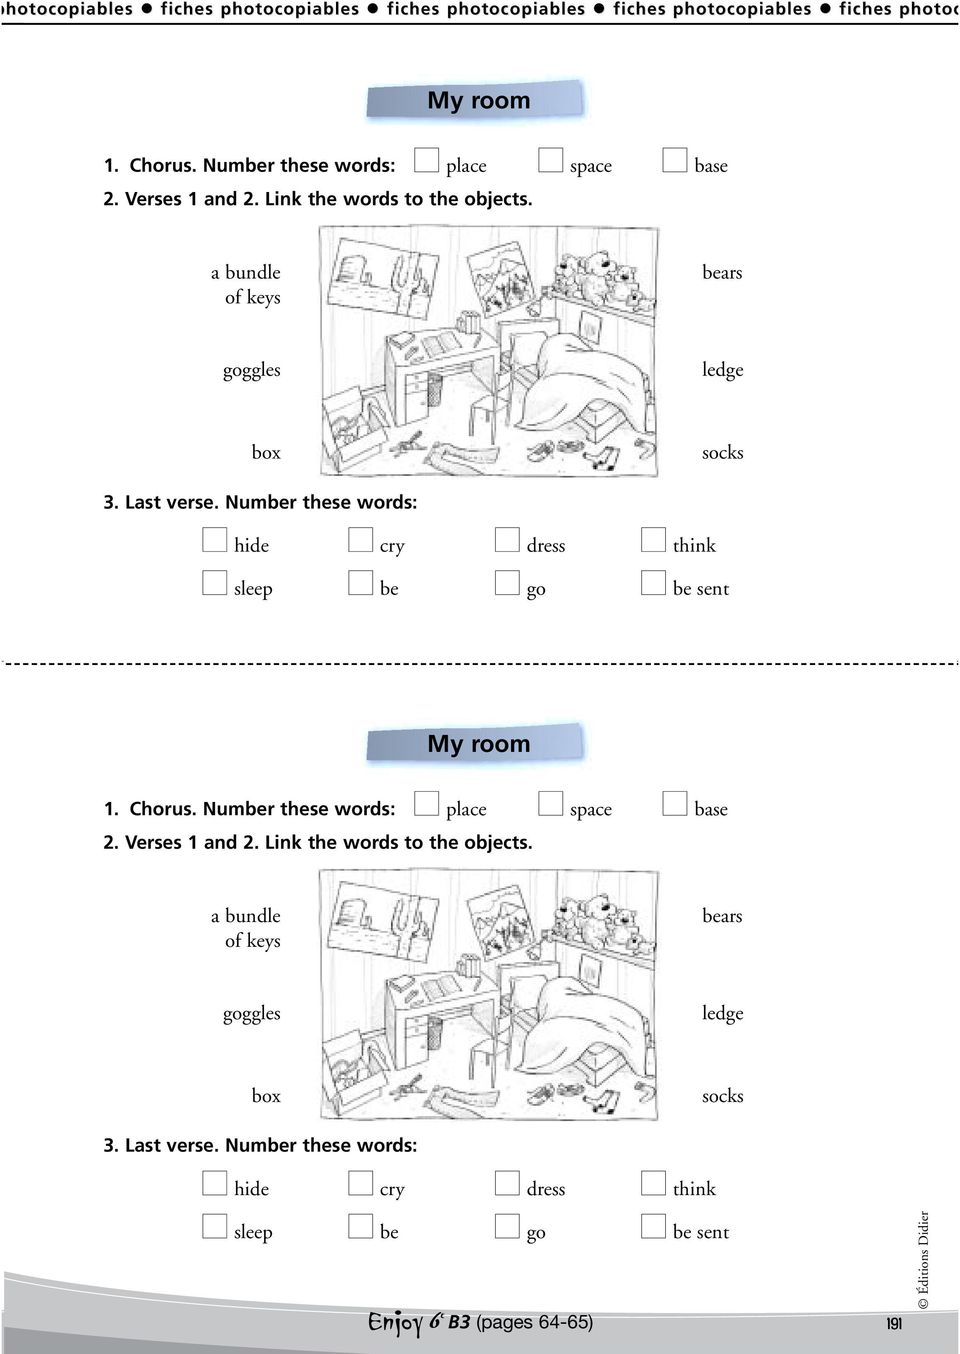 E For English 6e Workbook Correction Pdf LES FICHES PHOTOCOPIABLES D ENJOY ENGLISH IN 6 e - PDF Free Download